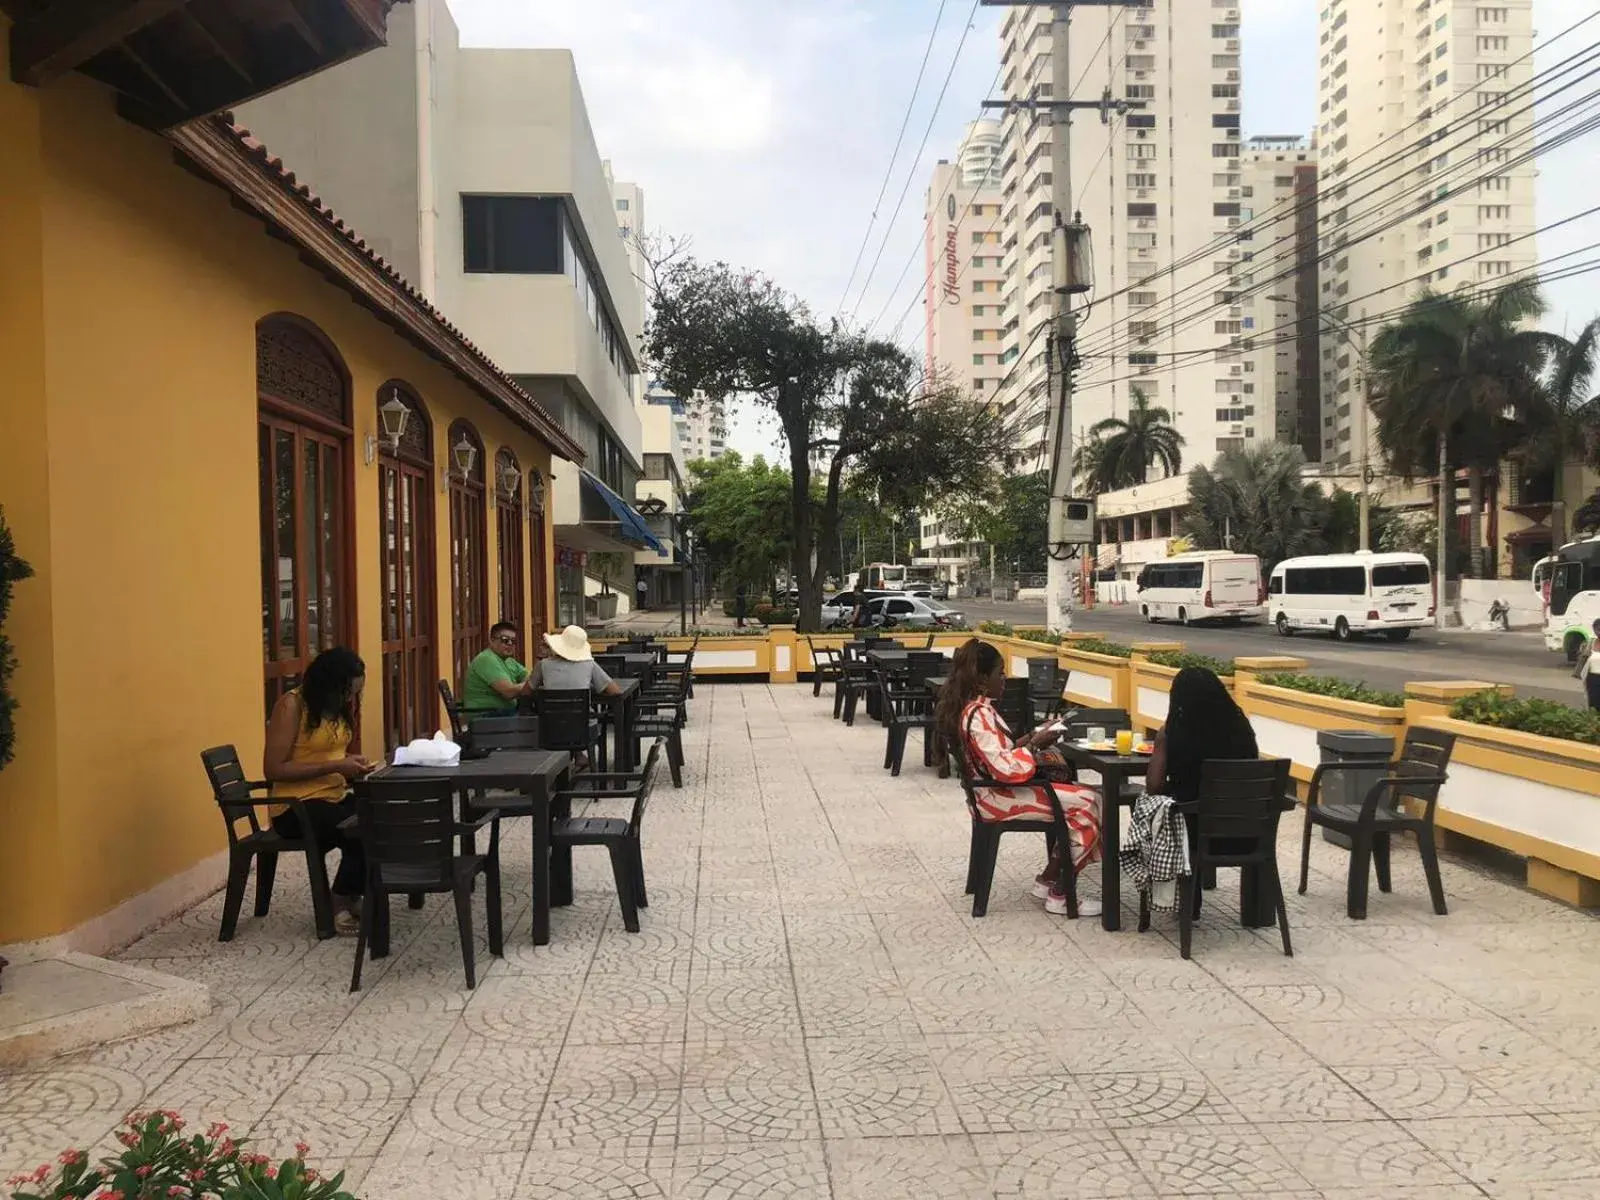 Restaurant/places to eat in San Martin Cartagena